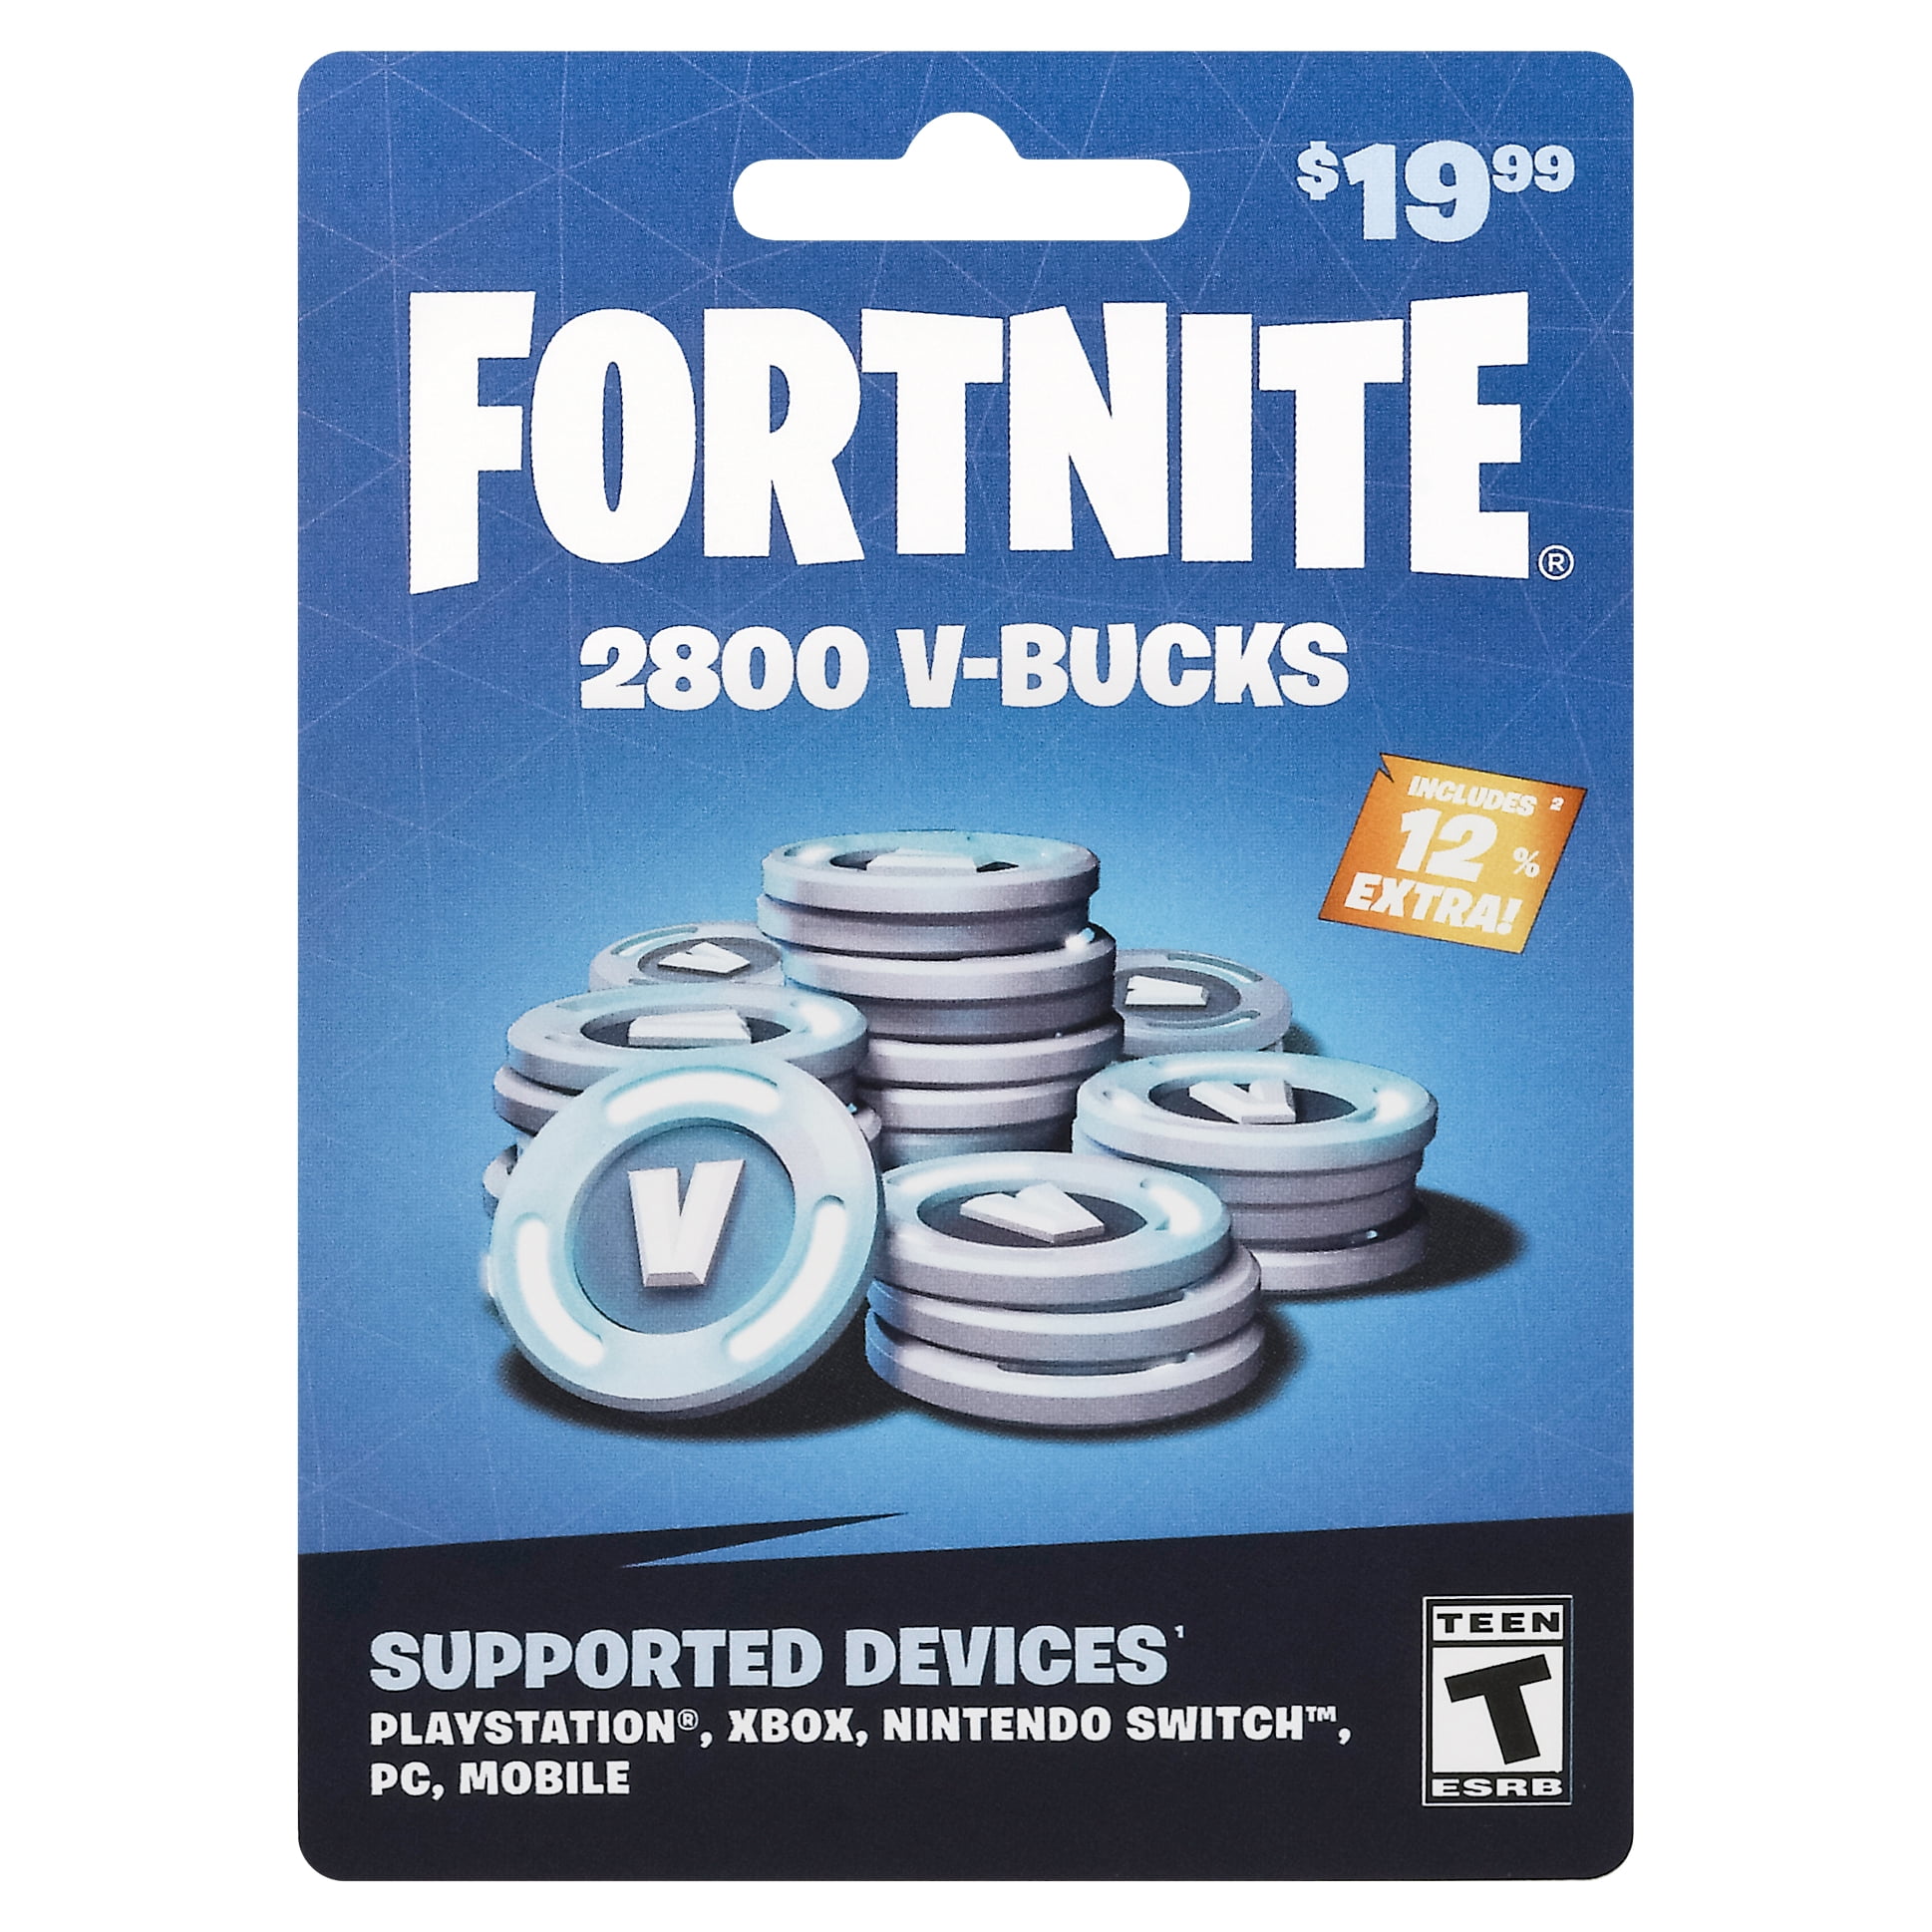 Gift card Epic Games 1000 V-Bucks de Fortnite Barata